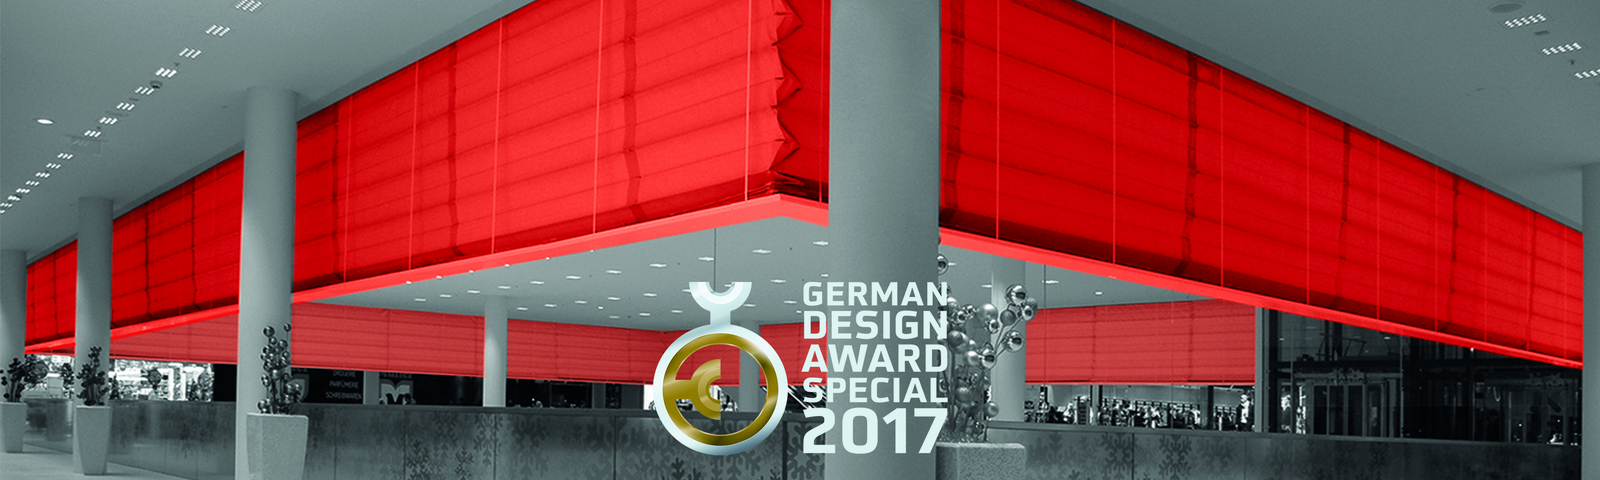 German Design Award 2017 goes to Stöbich fire protection curtain